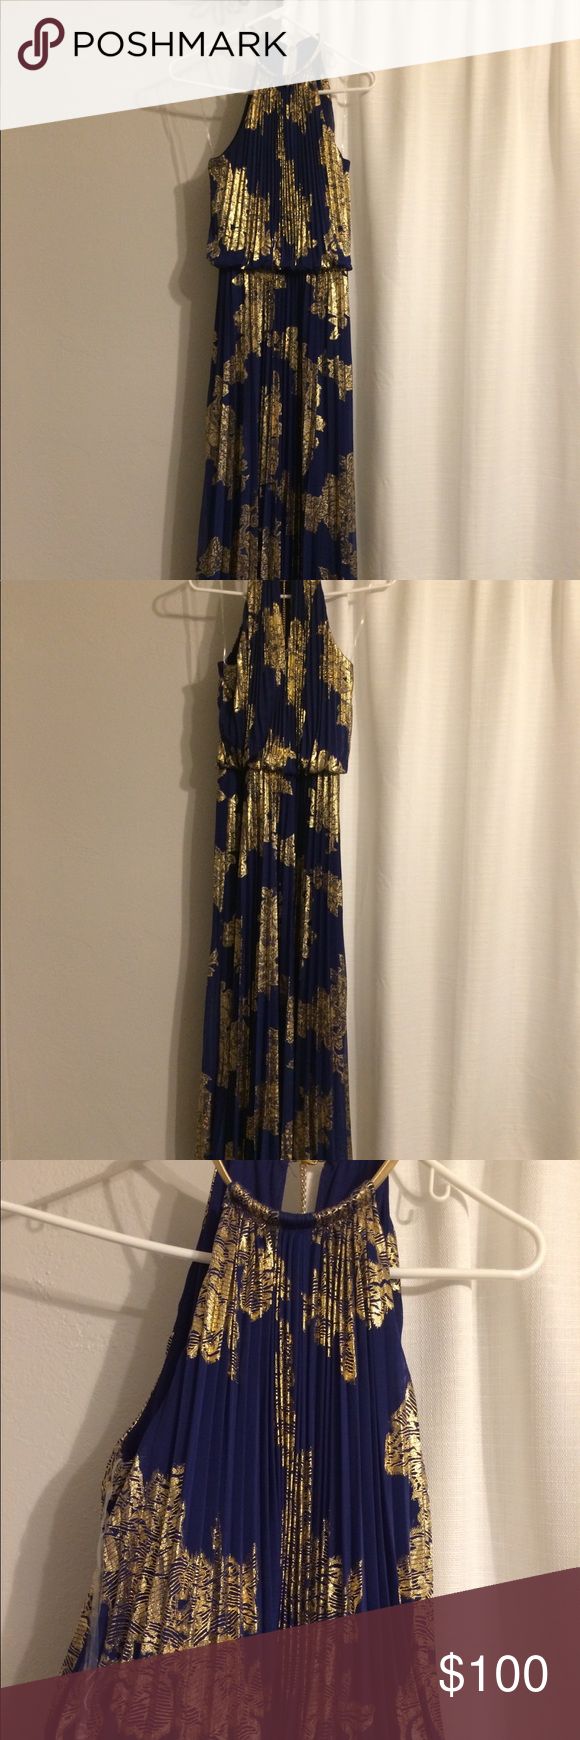 MSK full length size 6 royal blue and gold dress image